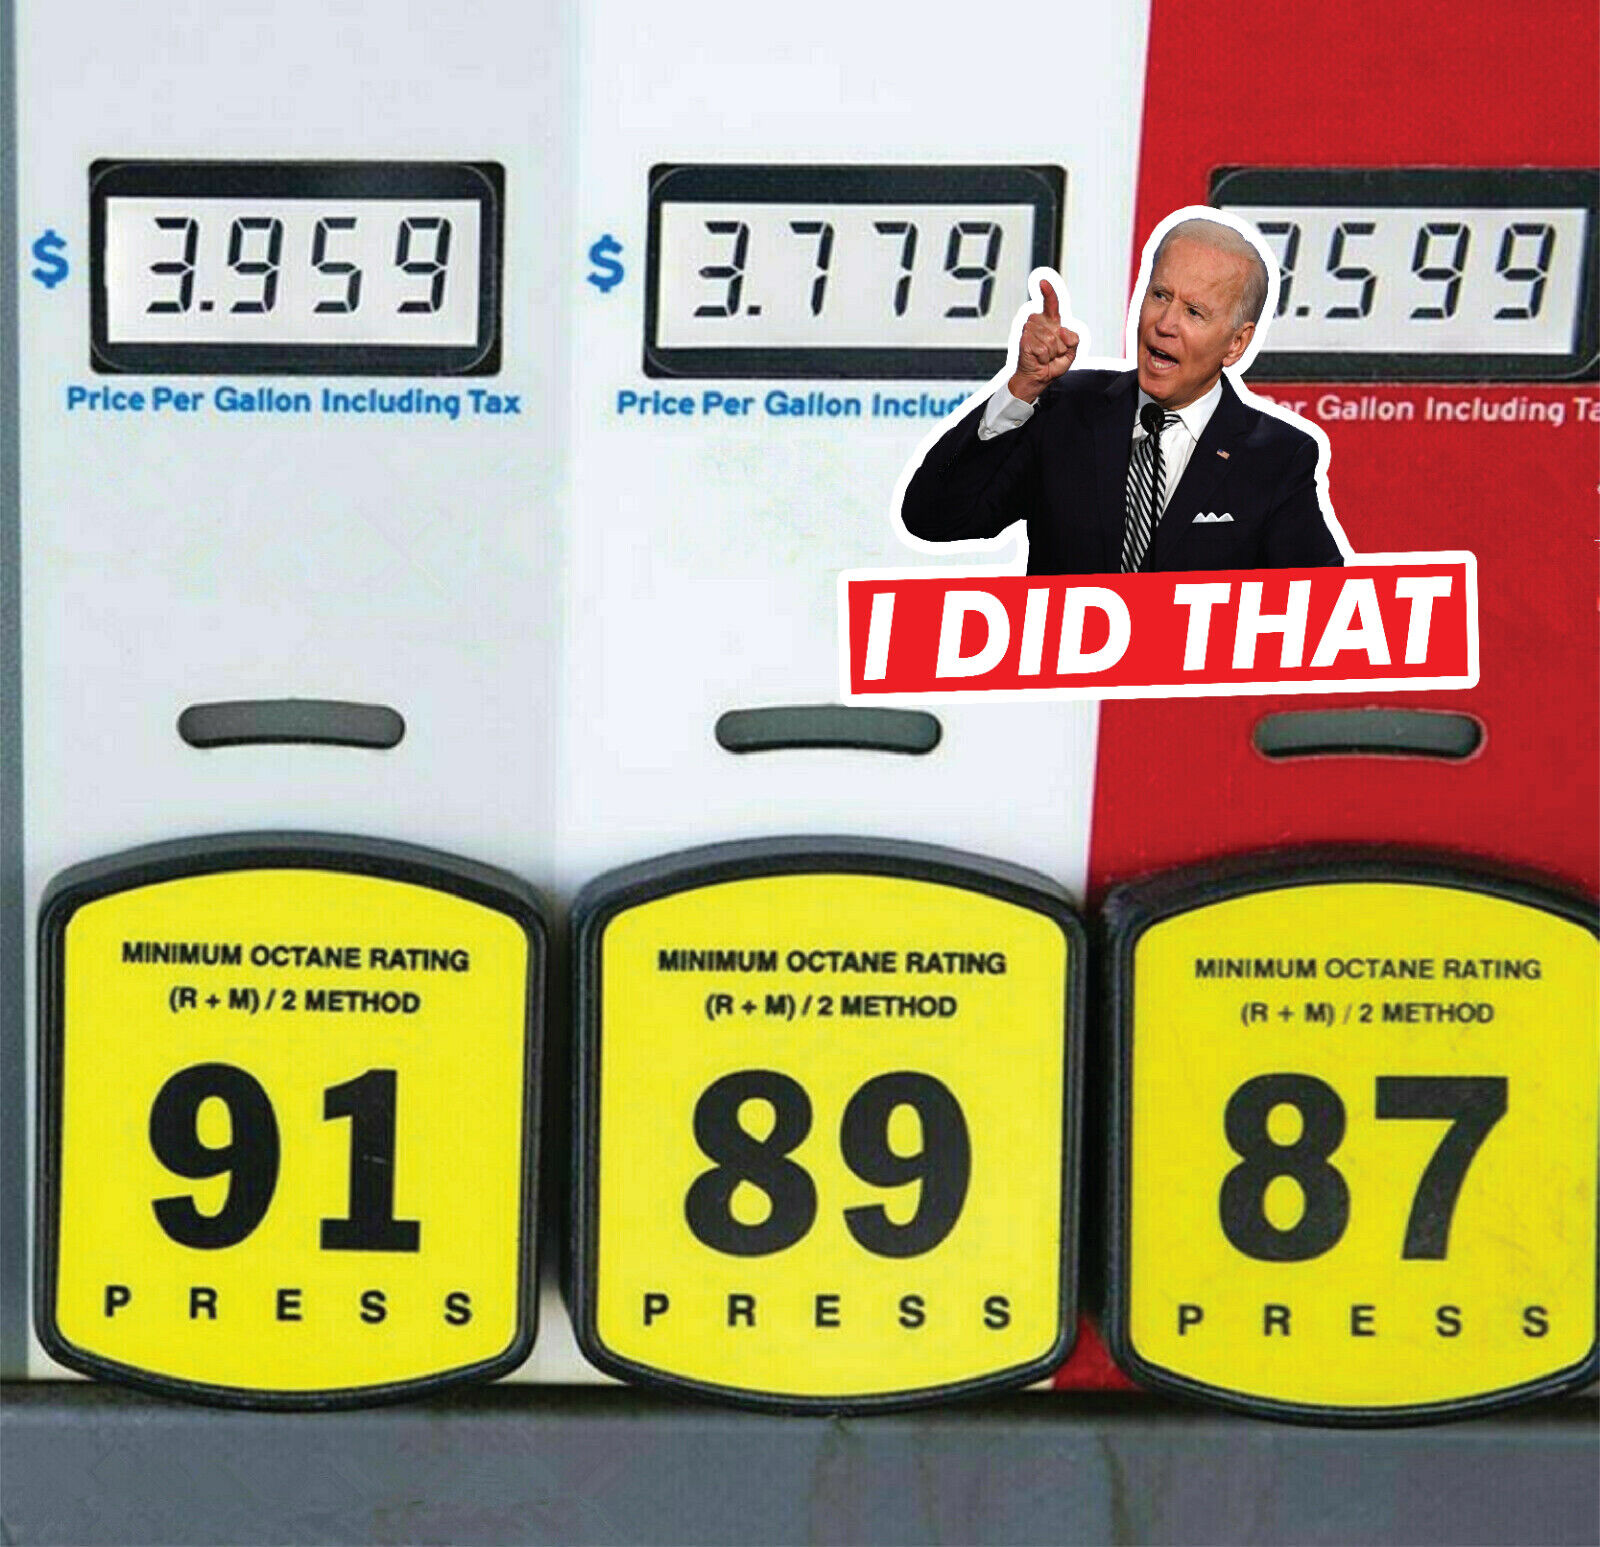 100pcs Joe Biden I DID THAT Sticker Funny Humor Decal Anti Joe Biden Stickers